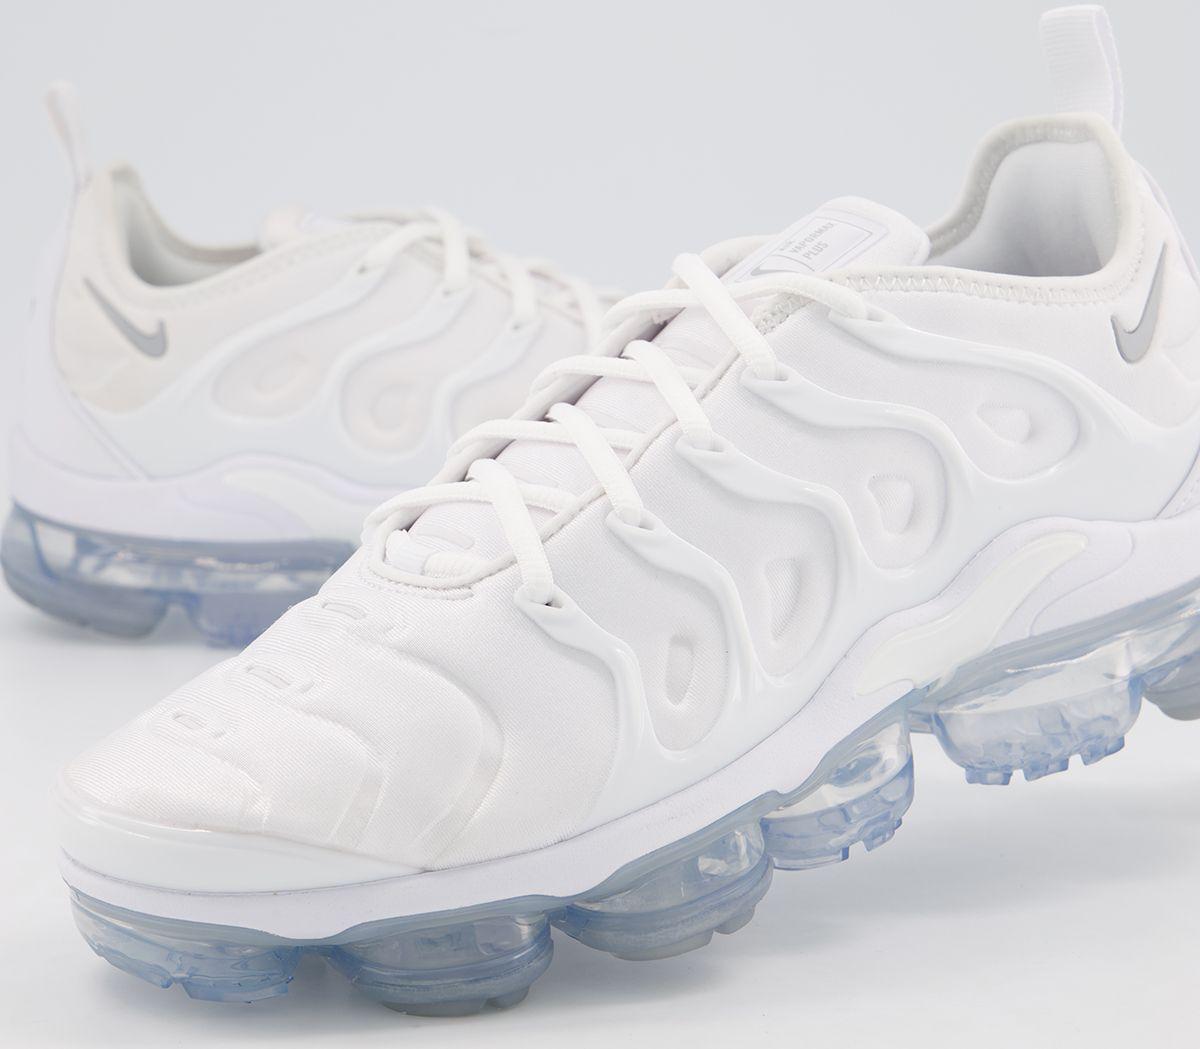 Nike Air Vapormax Plus Shoe in White / (White) for Men - Lyst